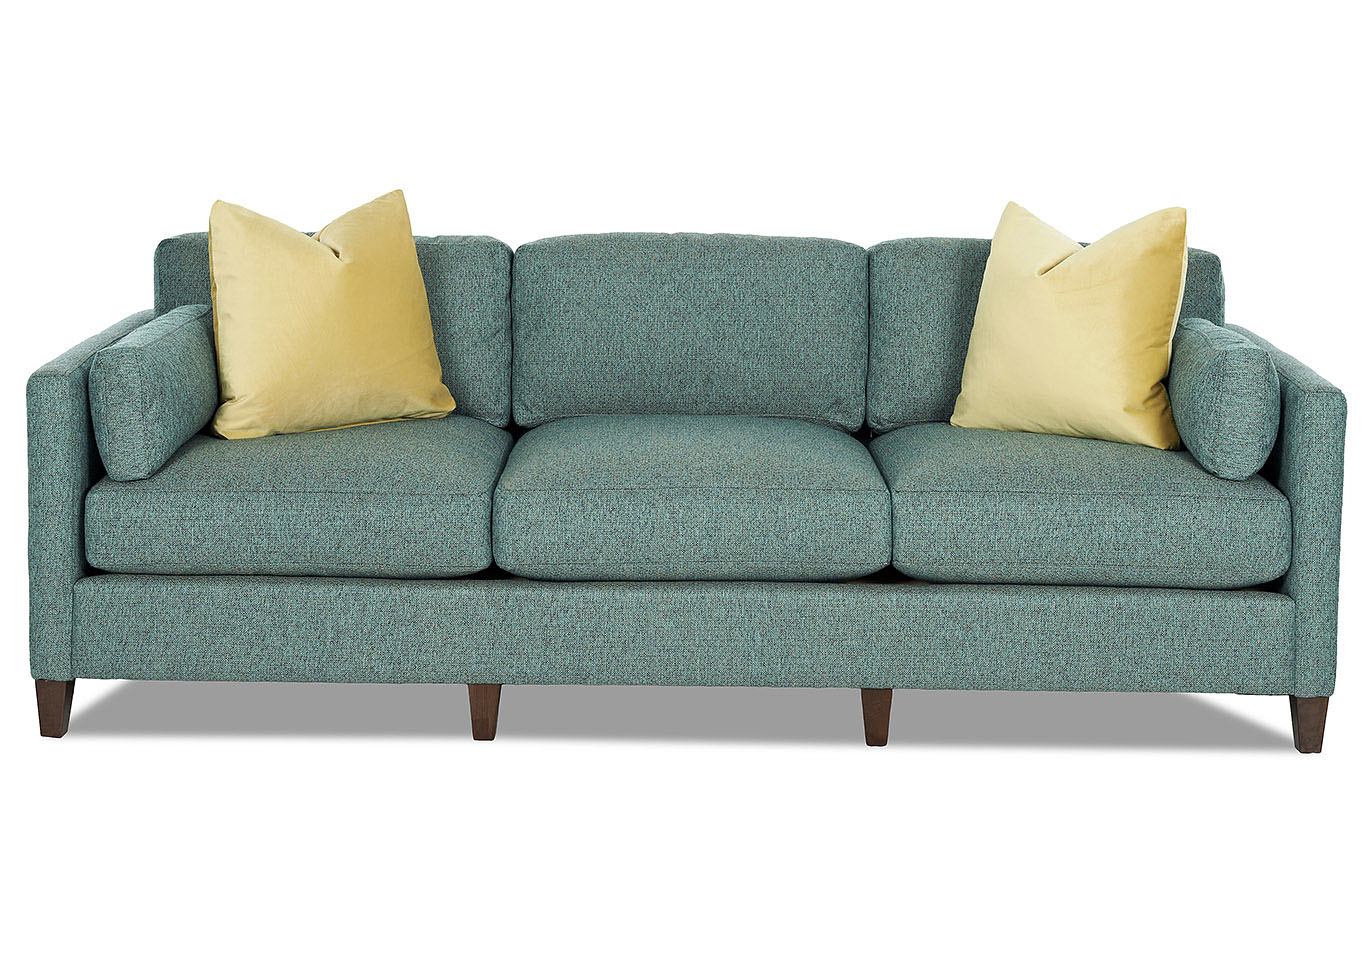 Jordan Marvel Teal Stationary Fabric Sofa,Klaussner Home Furnishings